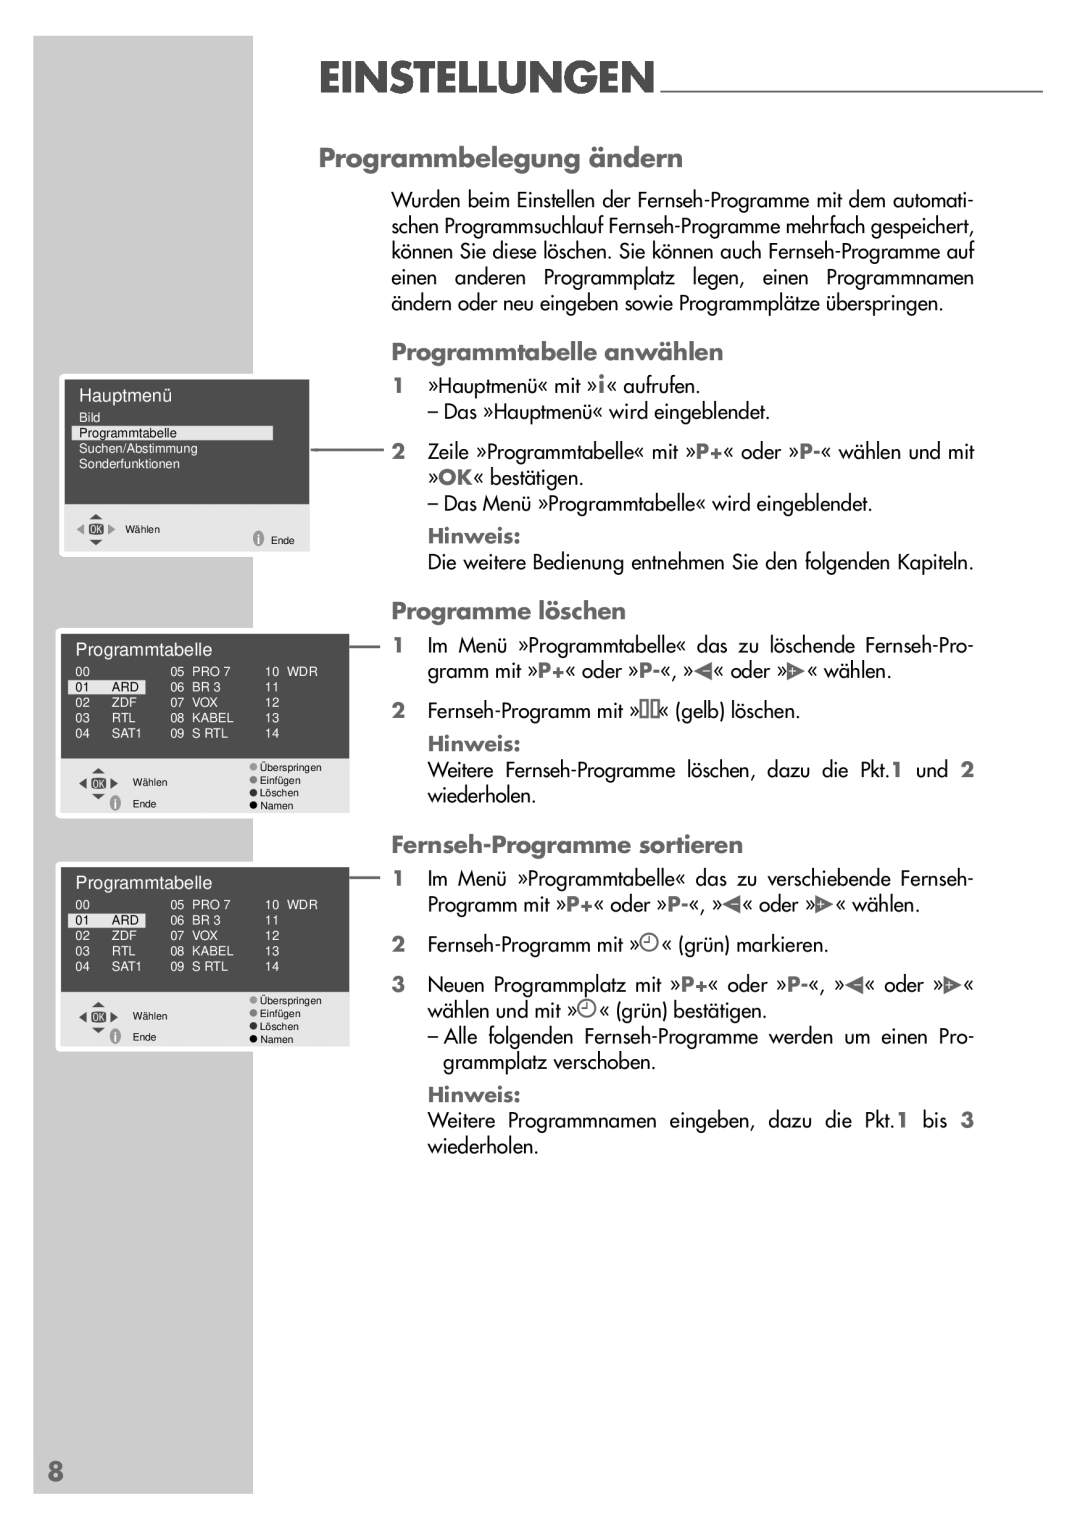 Grundig P37-4501 manual Programmbelegung ändern, Programmtabelle anwählen, Programme löschen, Fernseh-Programme sortieren 